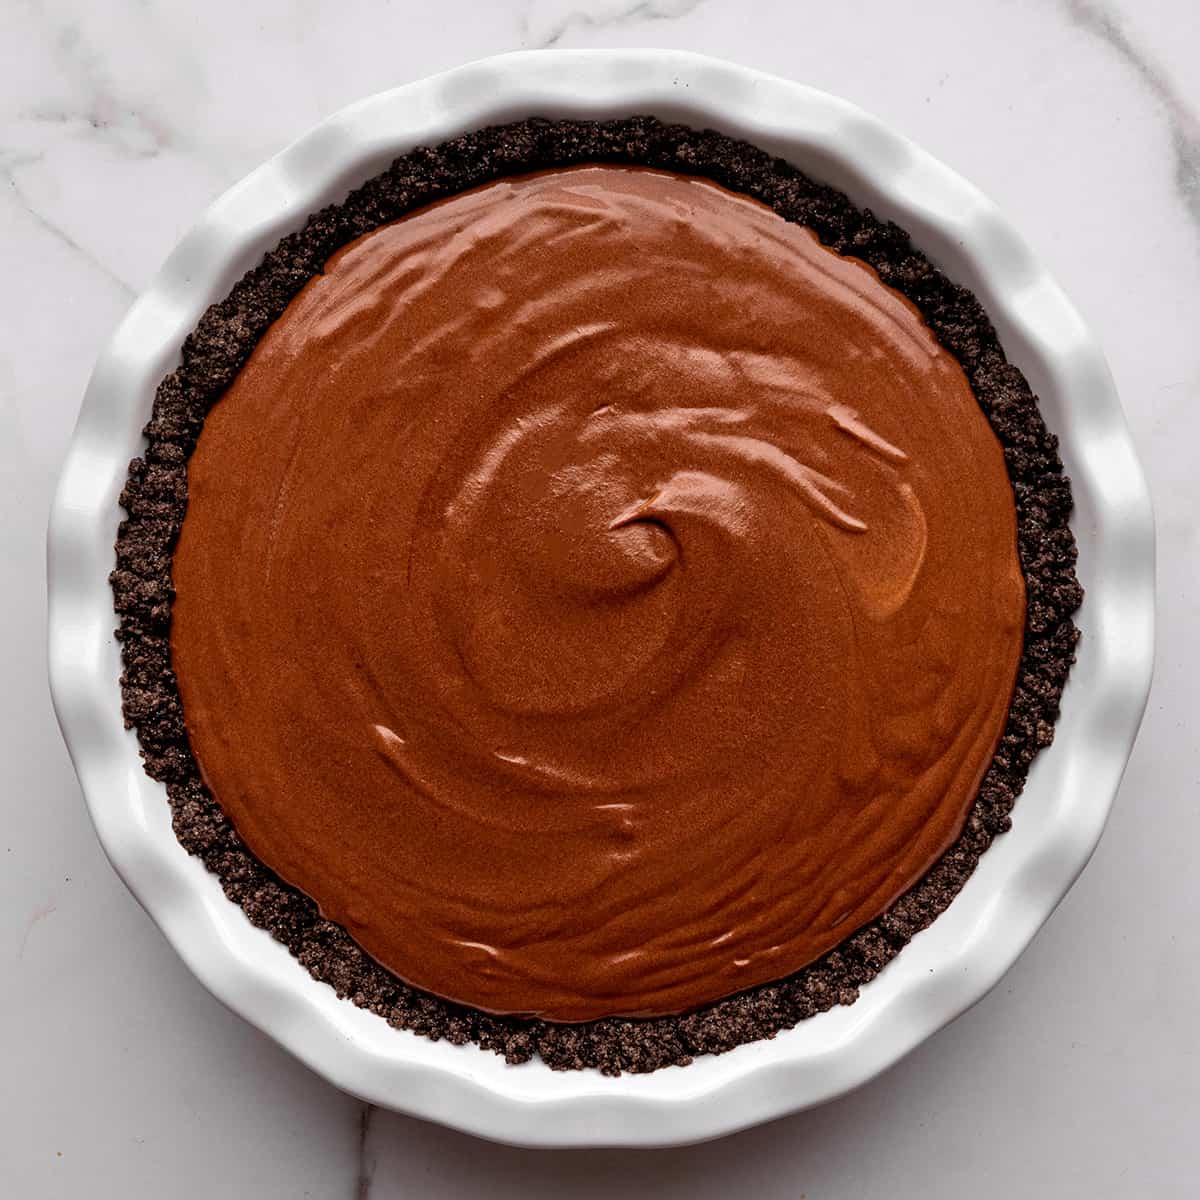 chocolate pudding pie filling spread into the oreo pie crust